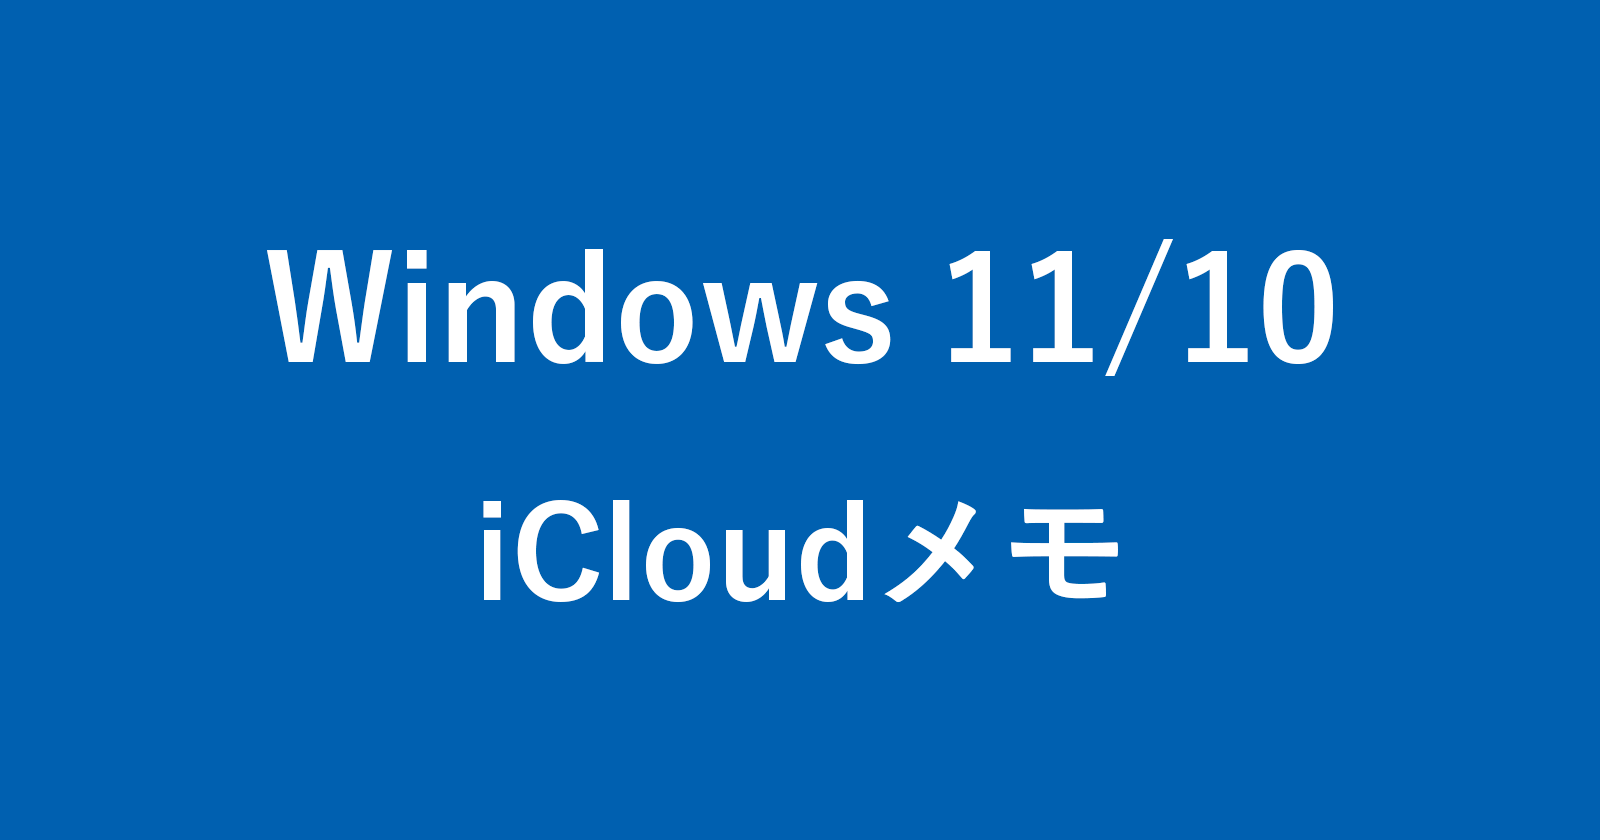 windows 11 10 icloud memo